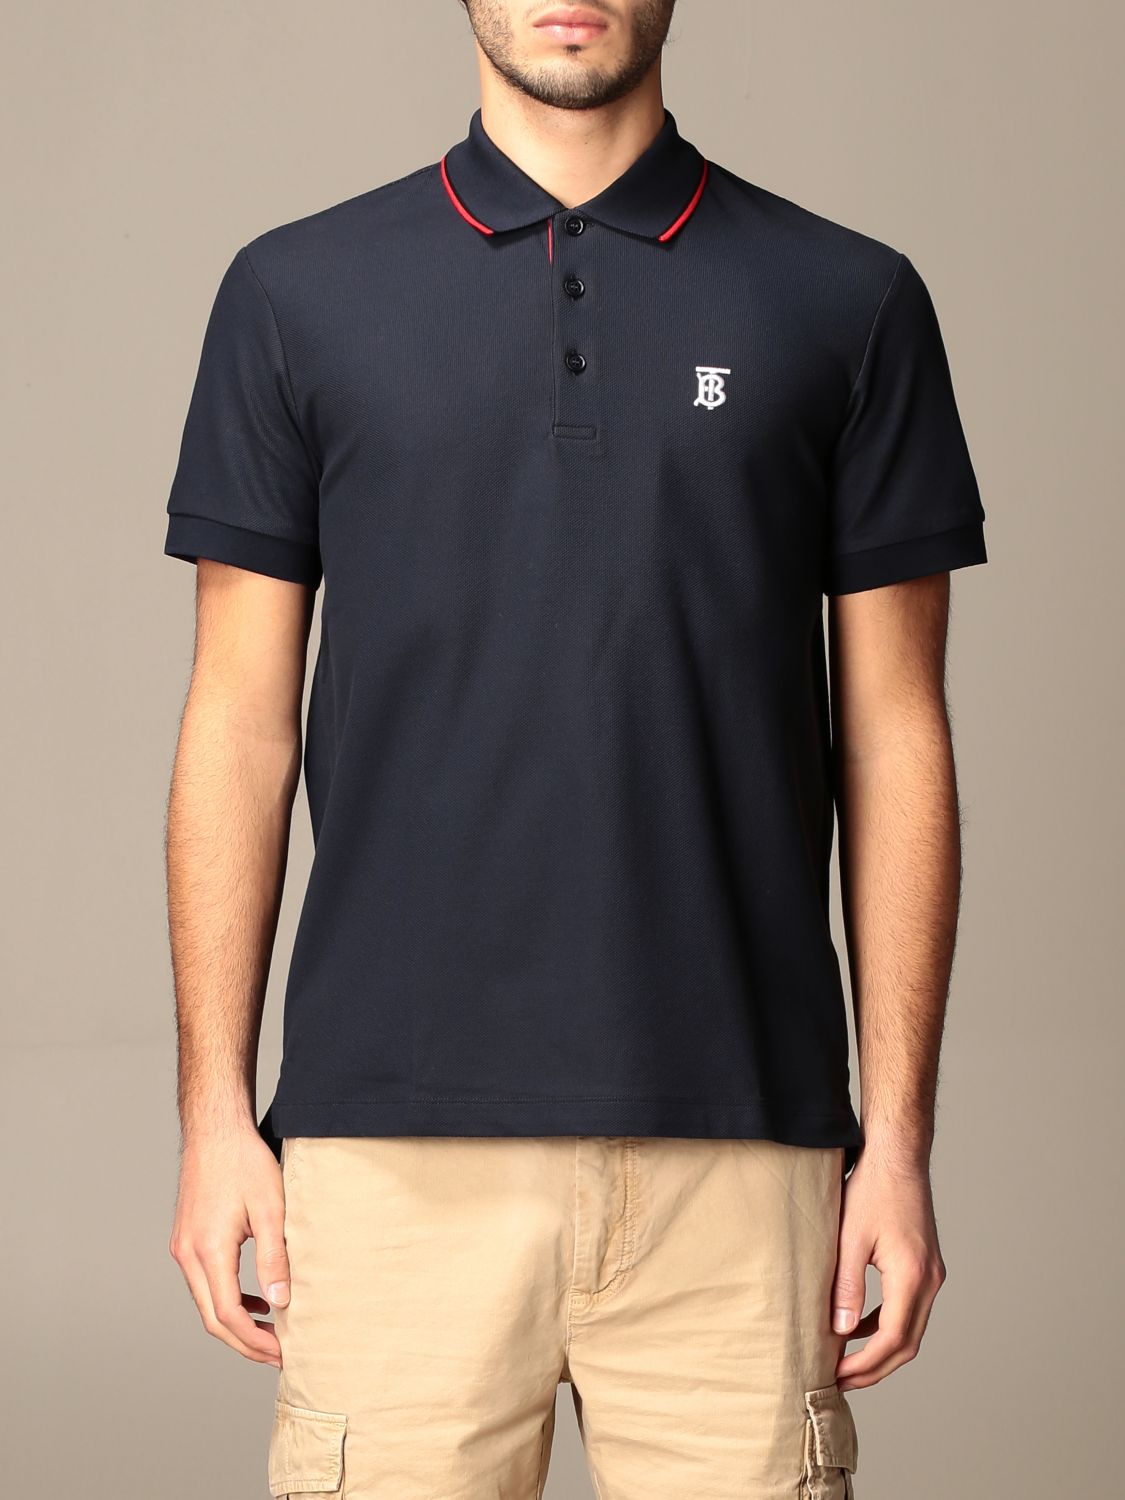 BURBERRY: Walton polo shirt with TB logo - Navy | Polo Shirt Burberry ...